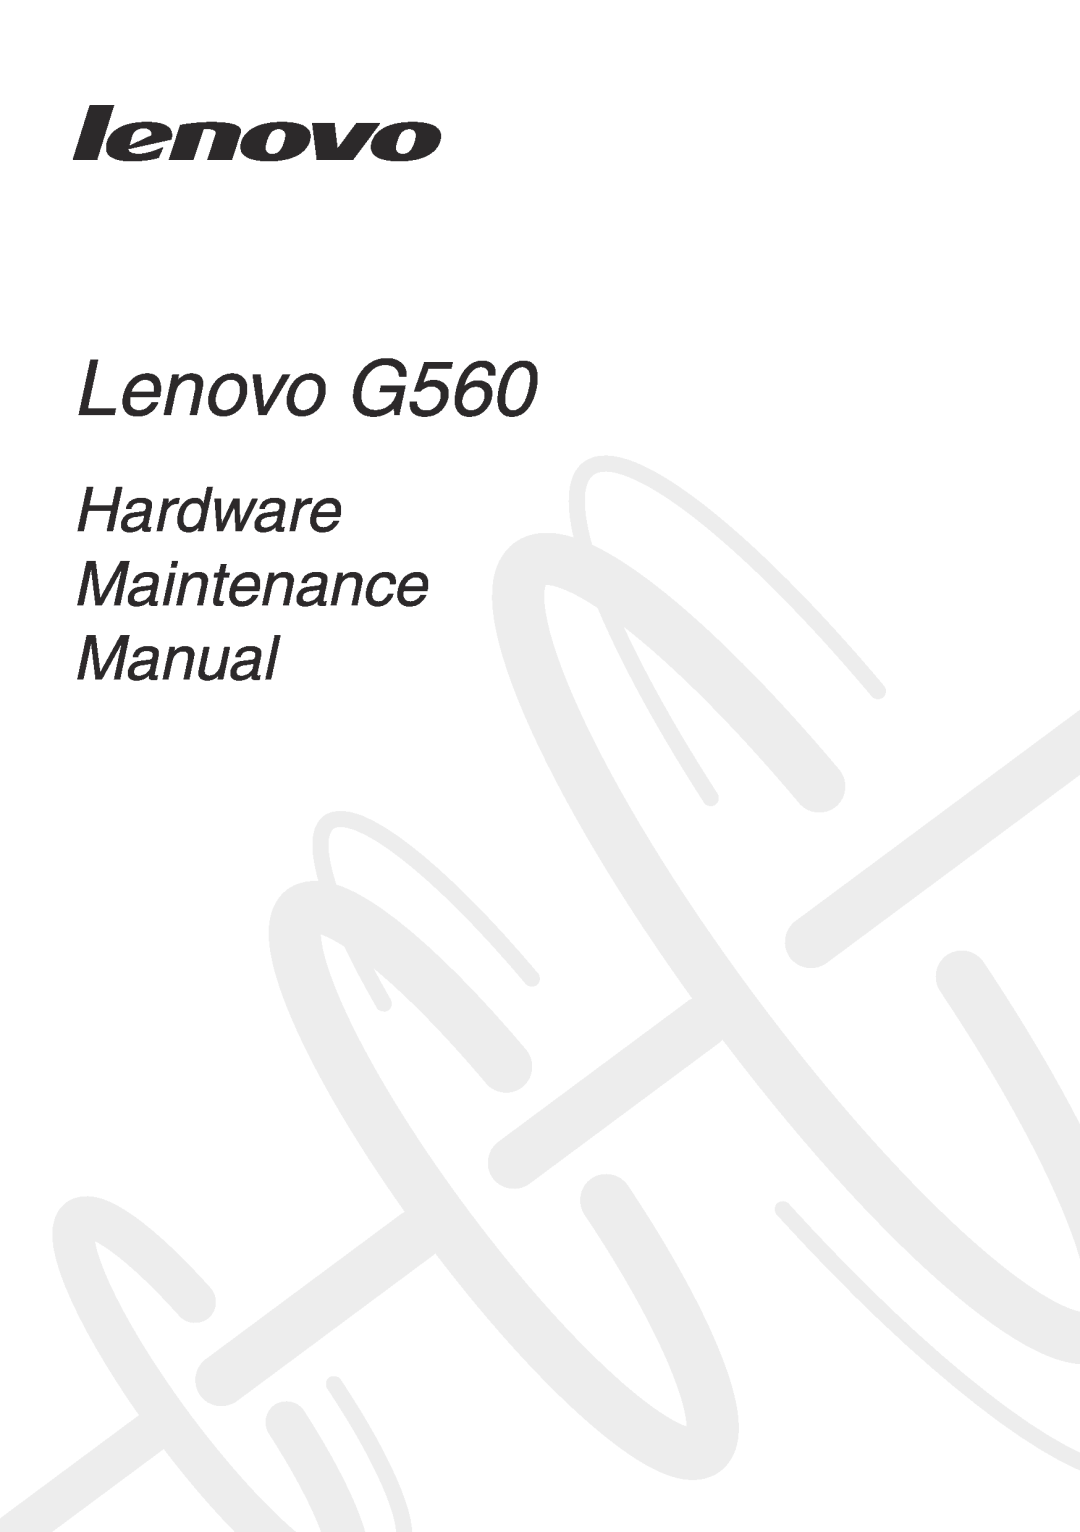 Lenovo manual Lenovo G560, Hardware Maintenance Manual 